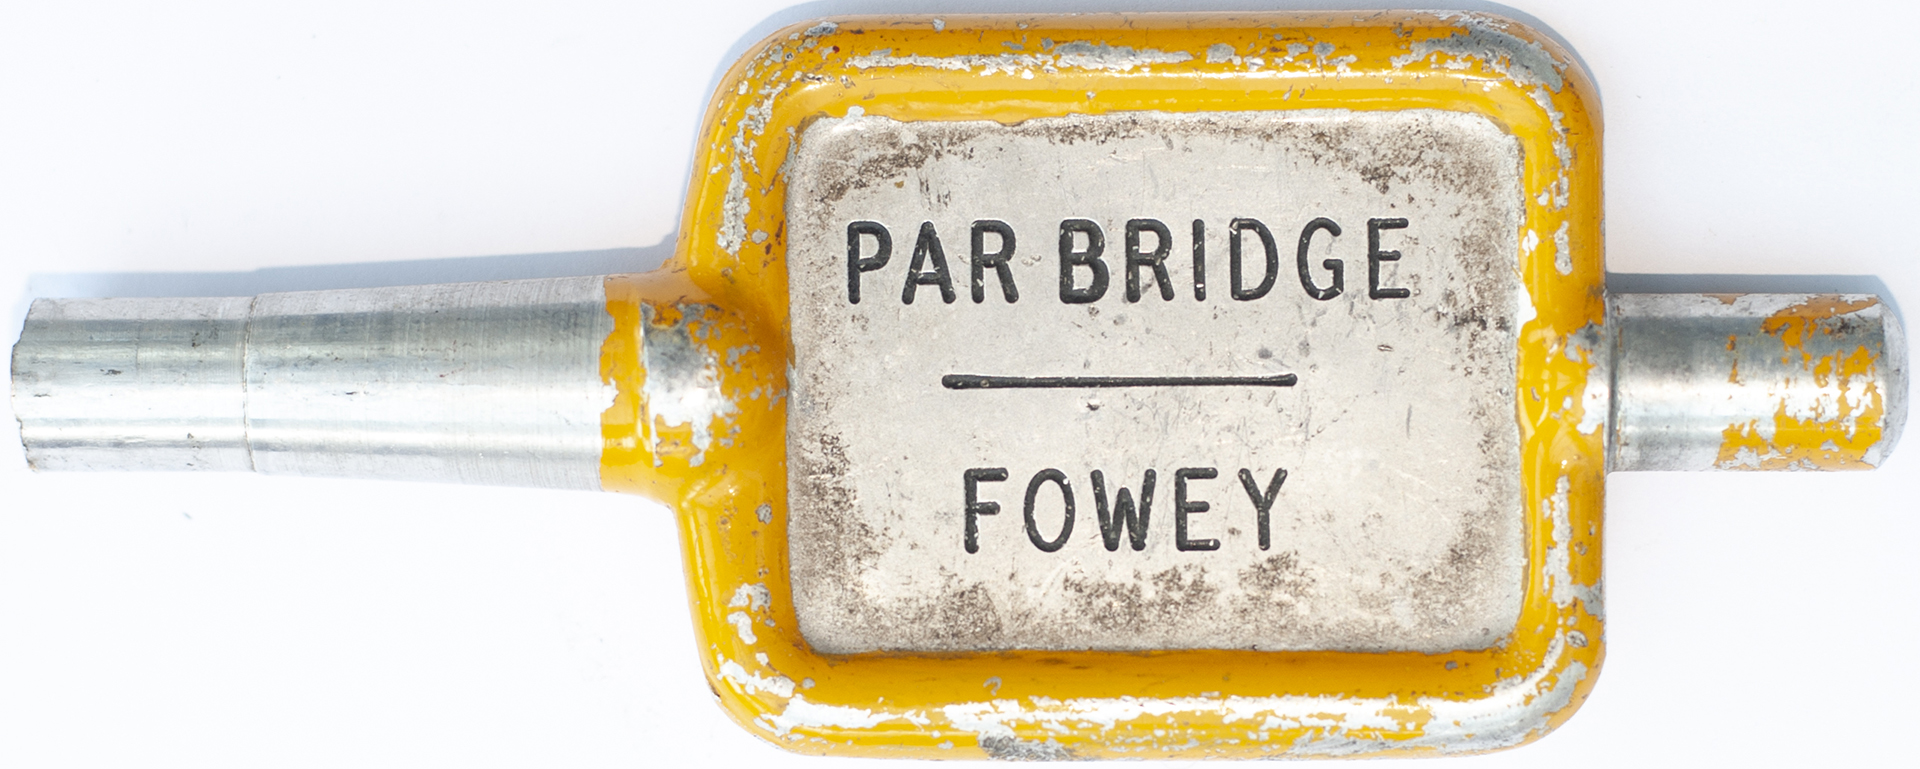 Par Bridge - Fowey